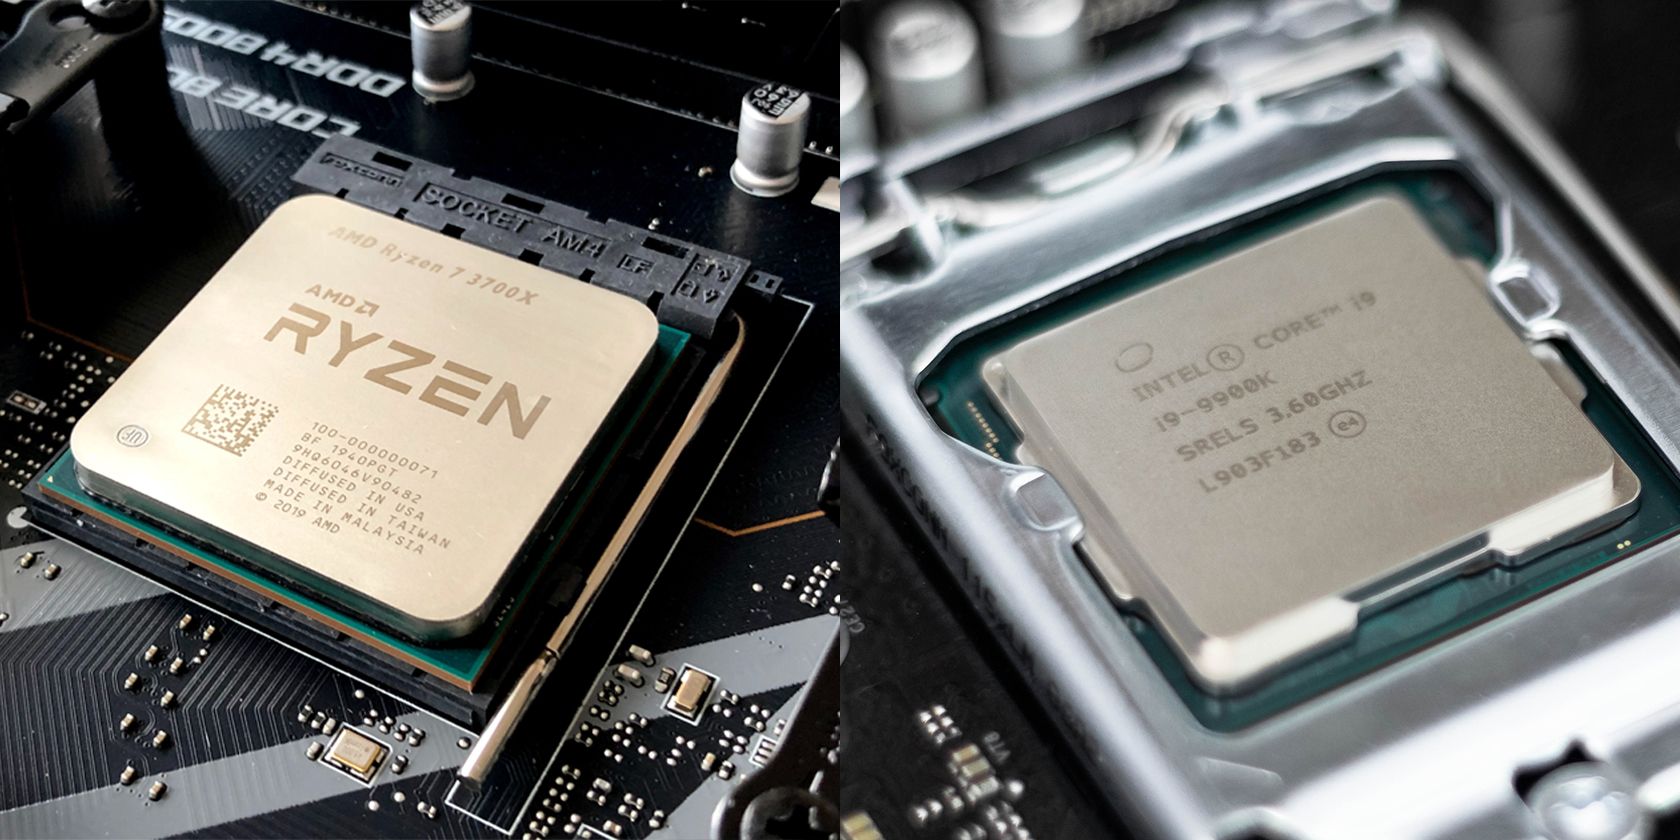 AMD processor and Intel processor side by side